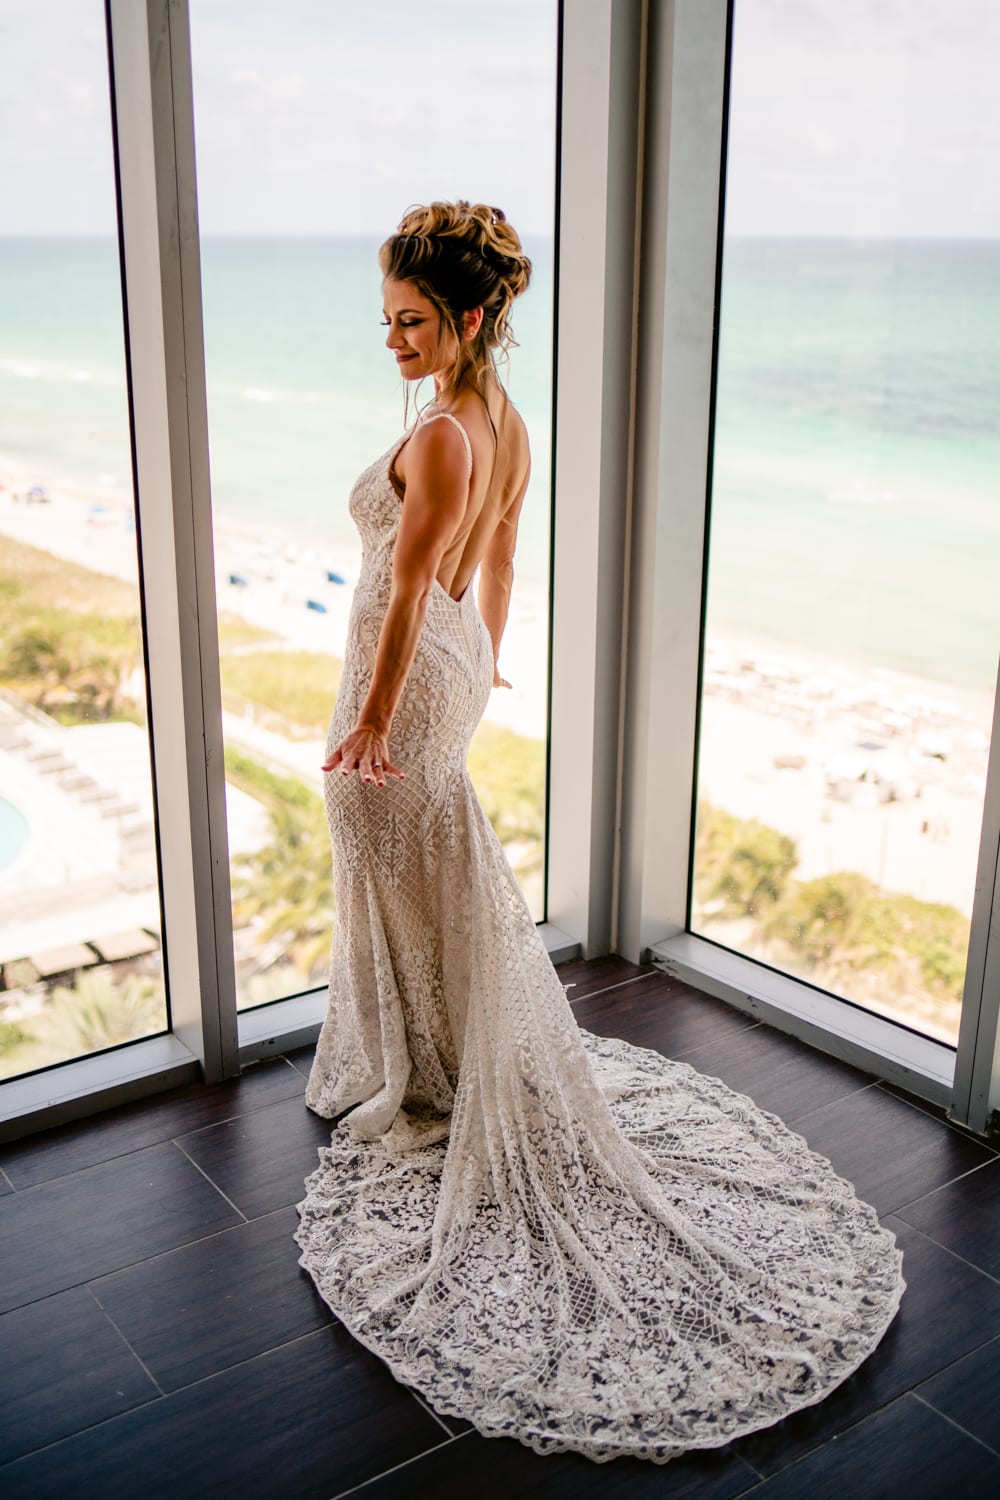 A bride in a wedding dress standing in front of a window overlooking the ocean at Eden Roc Resort in Miami.